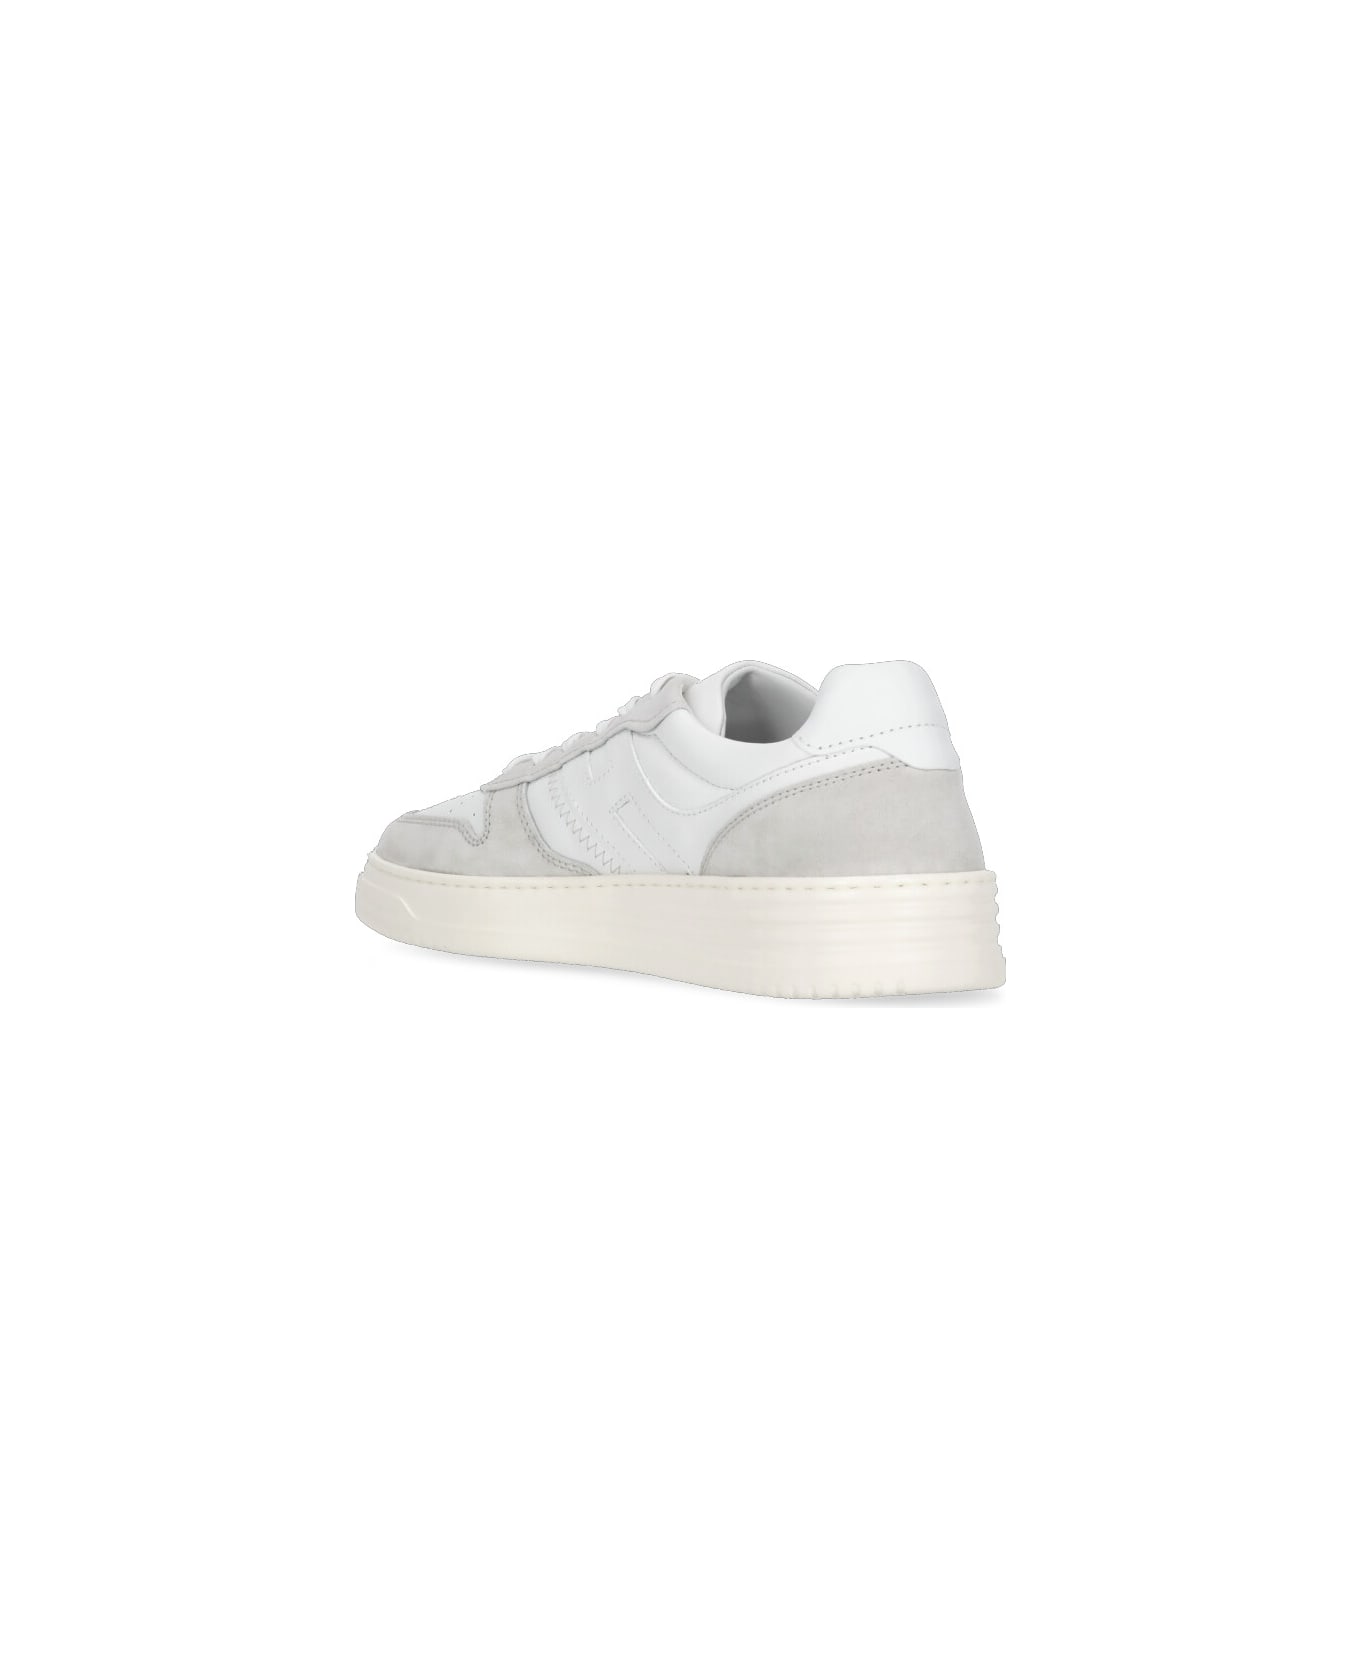 Hogan H630 Sneakers - White/beige スニーカー